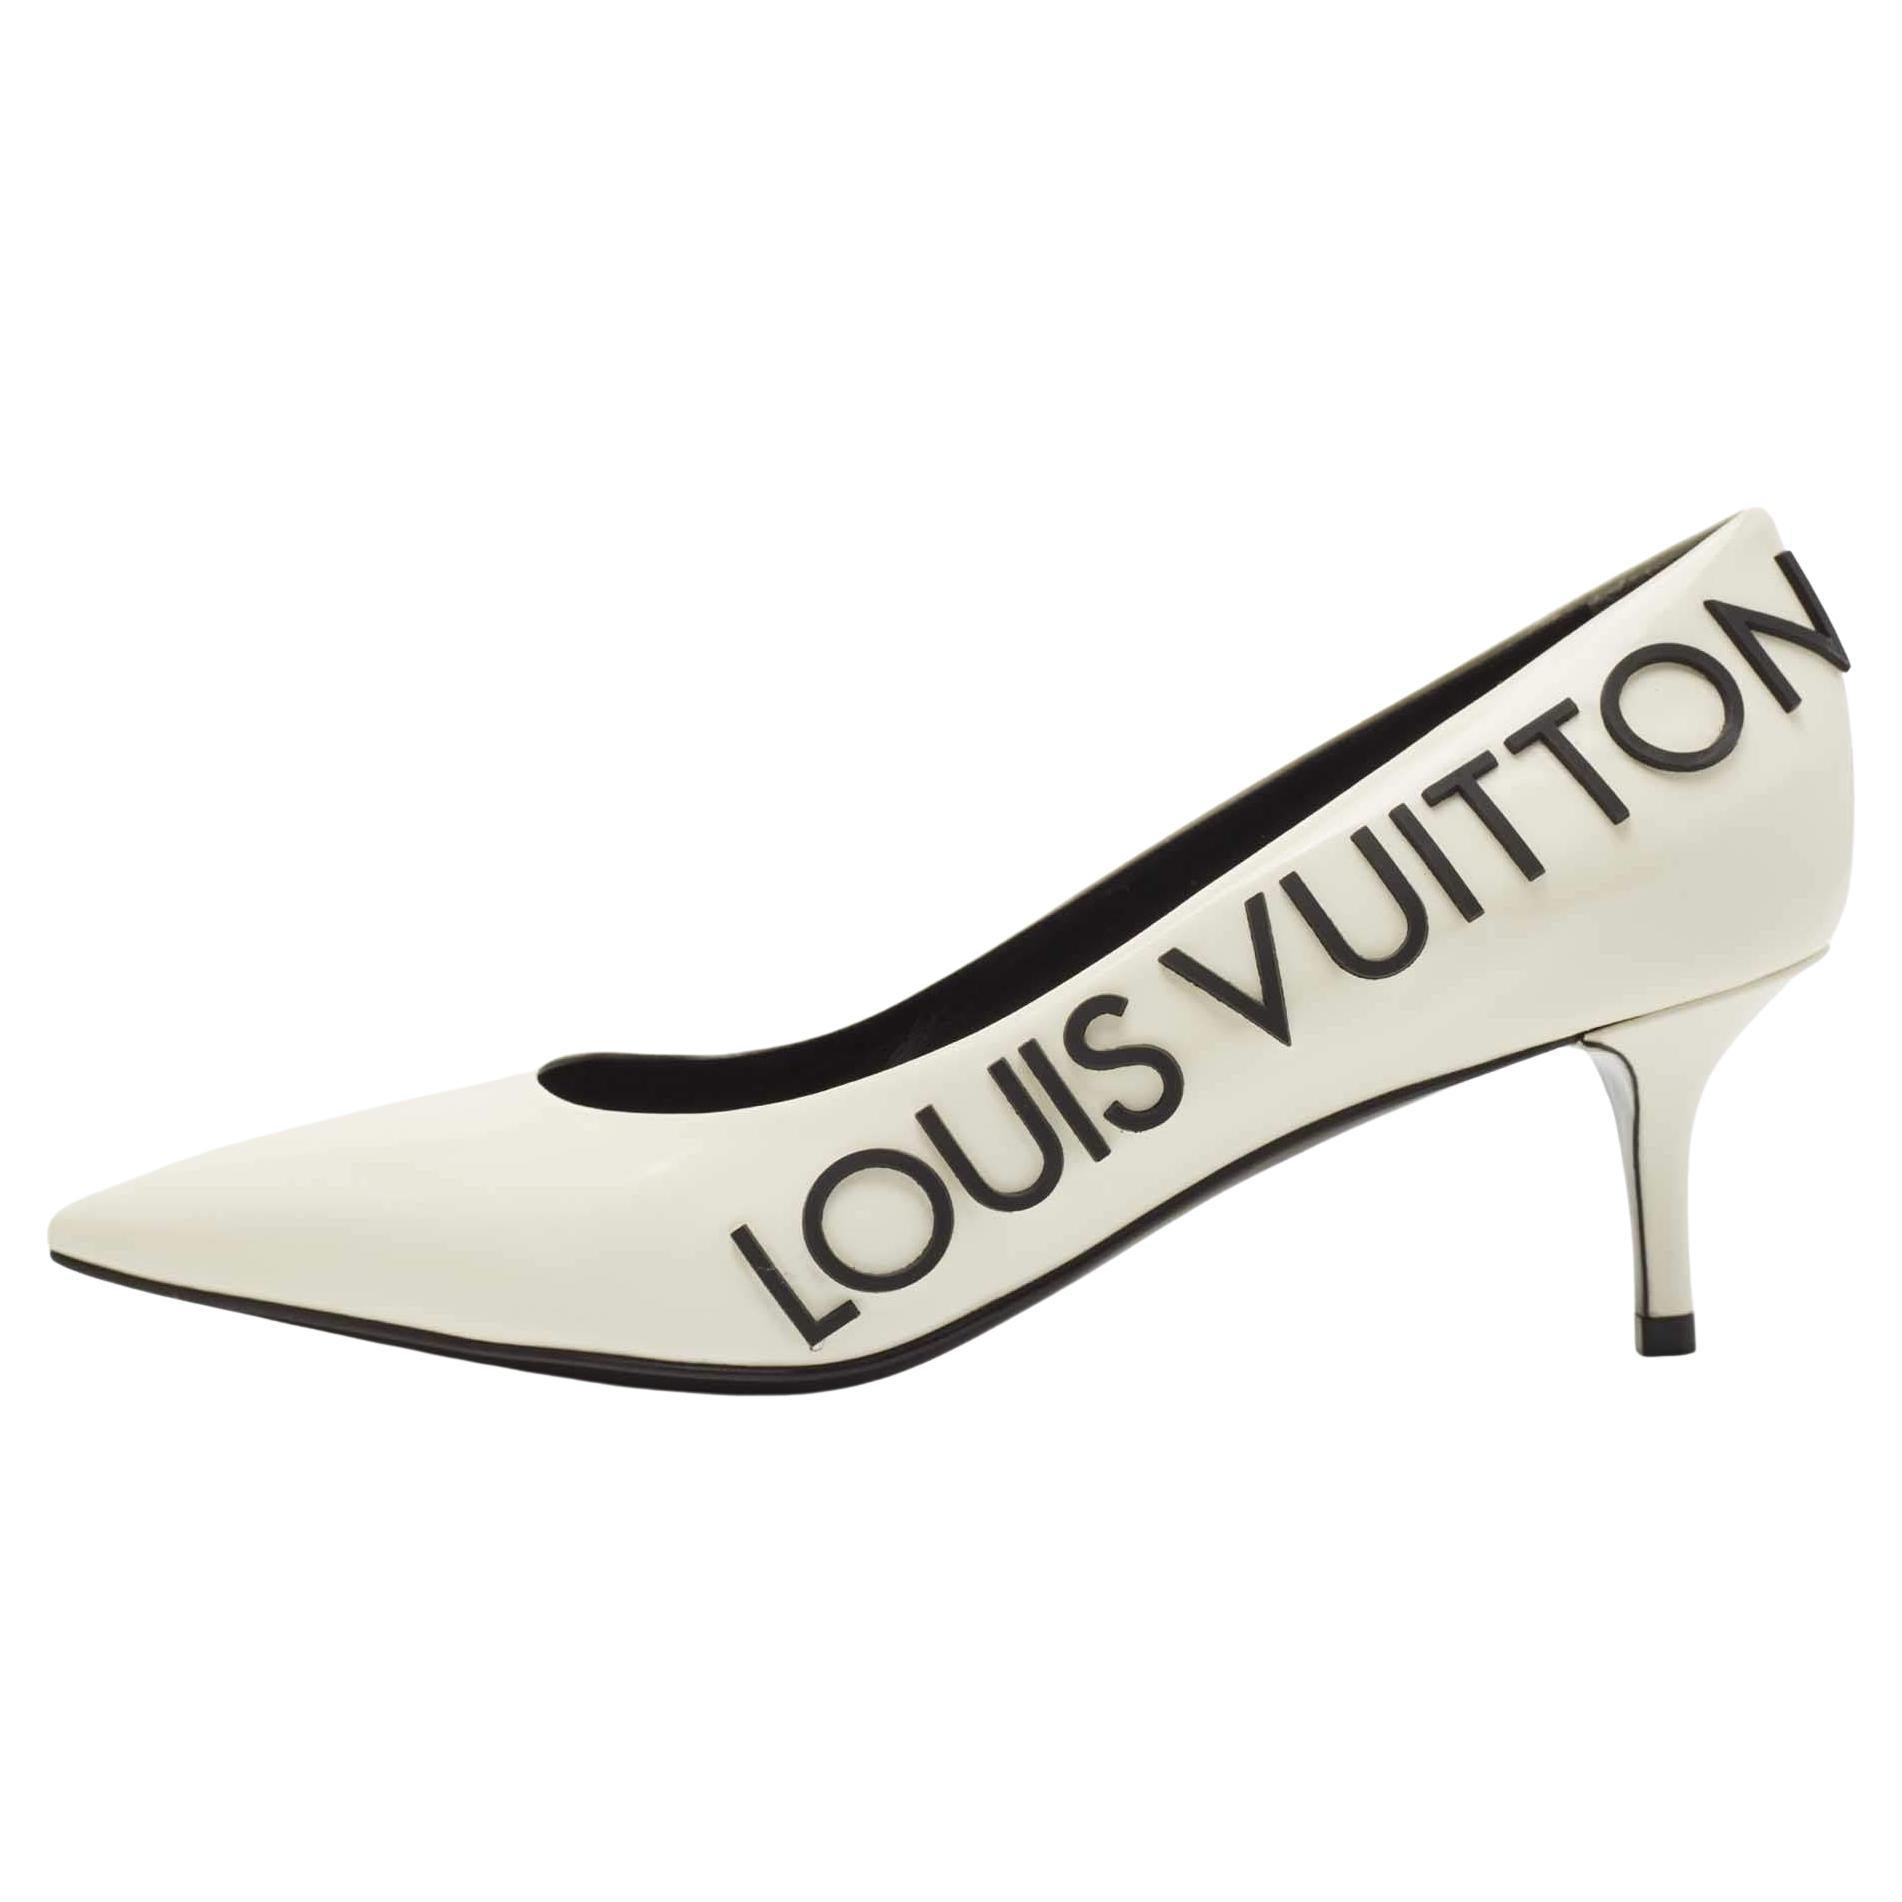 Louis Vuitton, Shoes, Lv Louis Vuitton Blue Kitten Heels Sandals Sz38